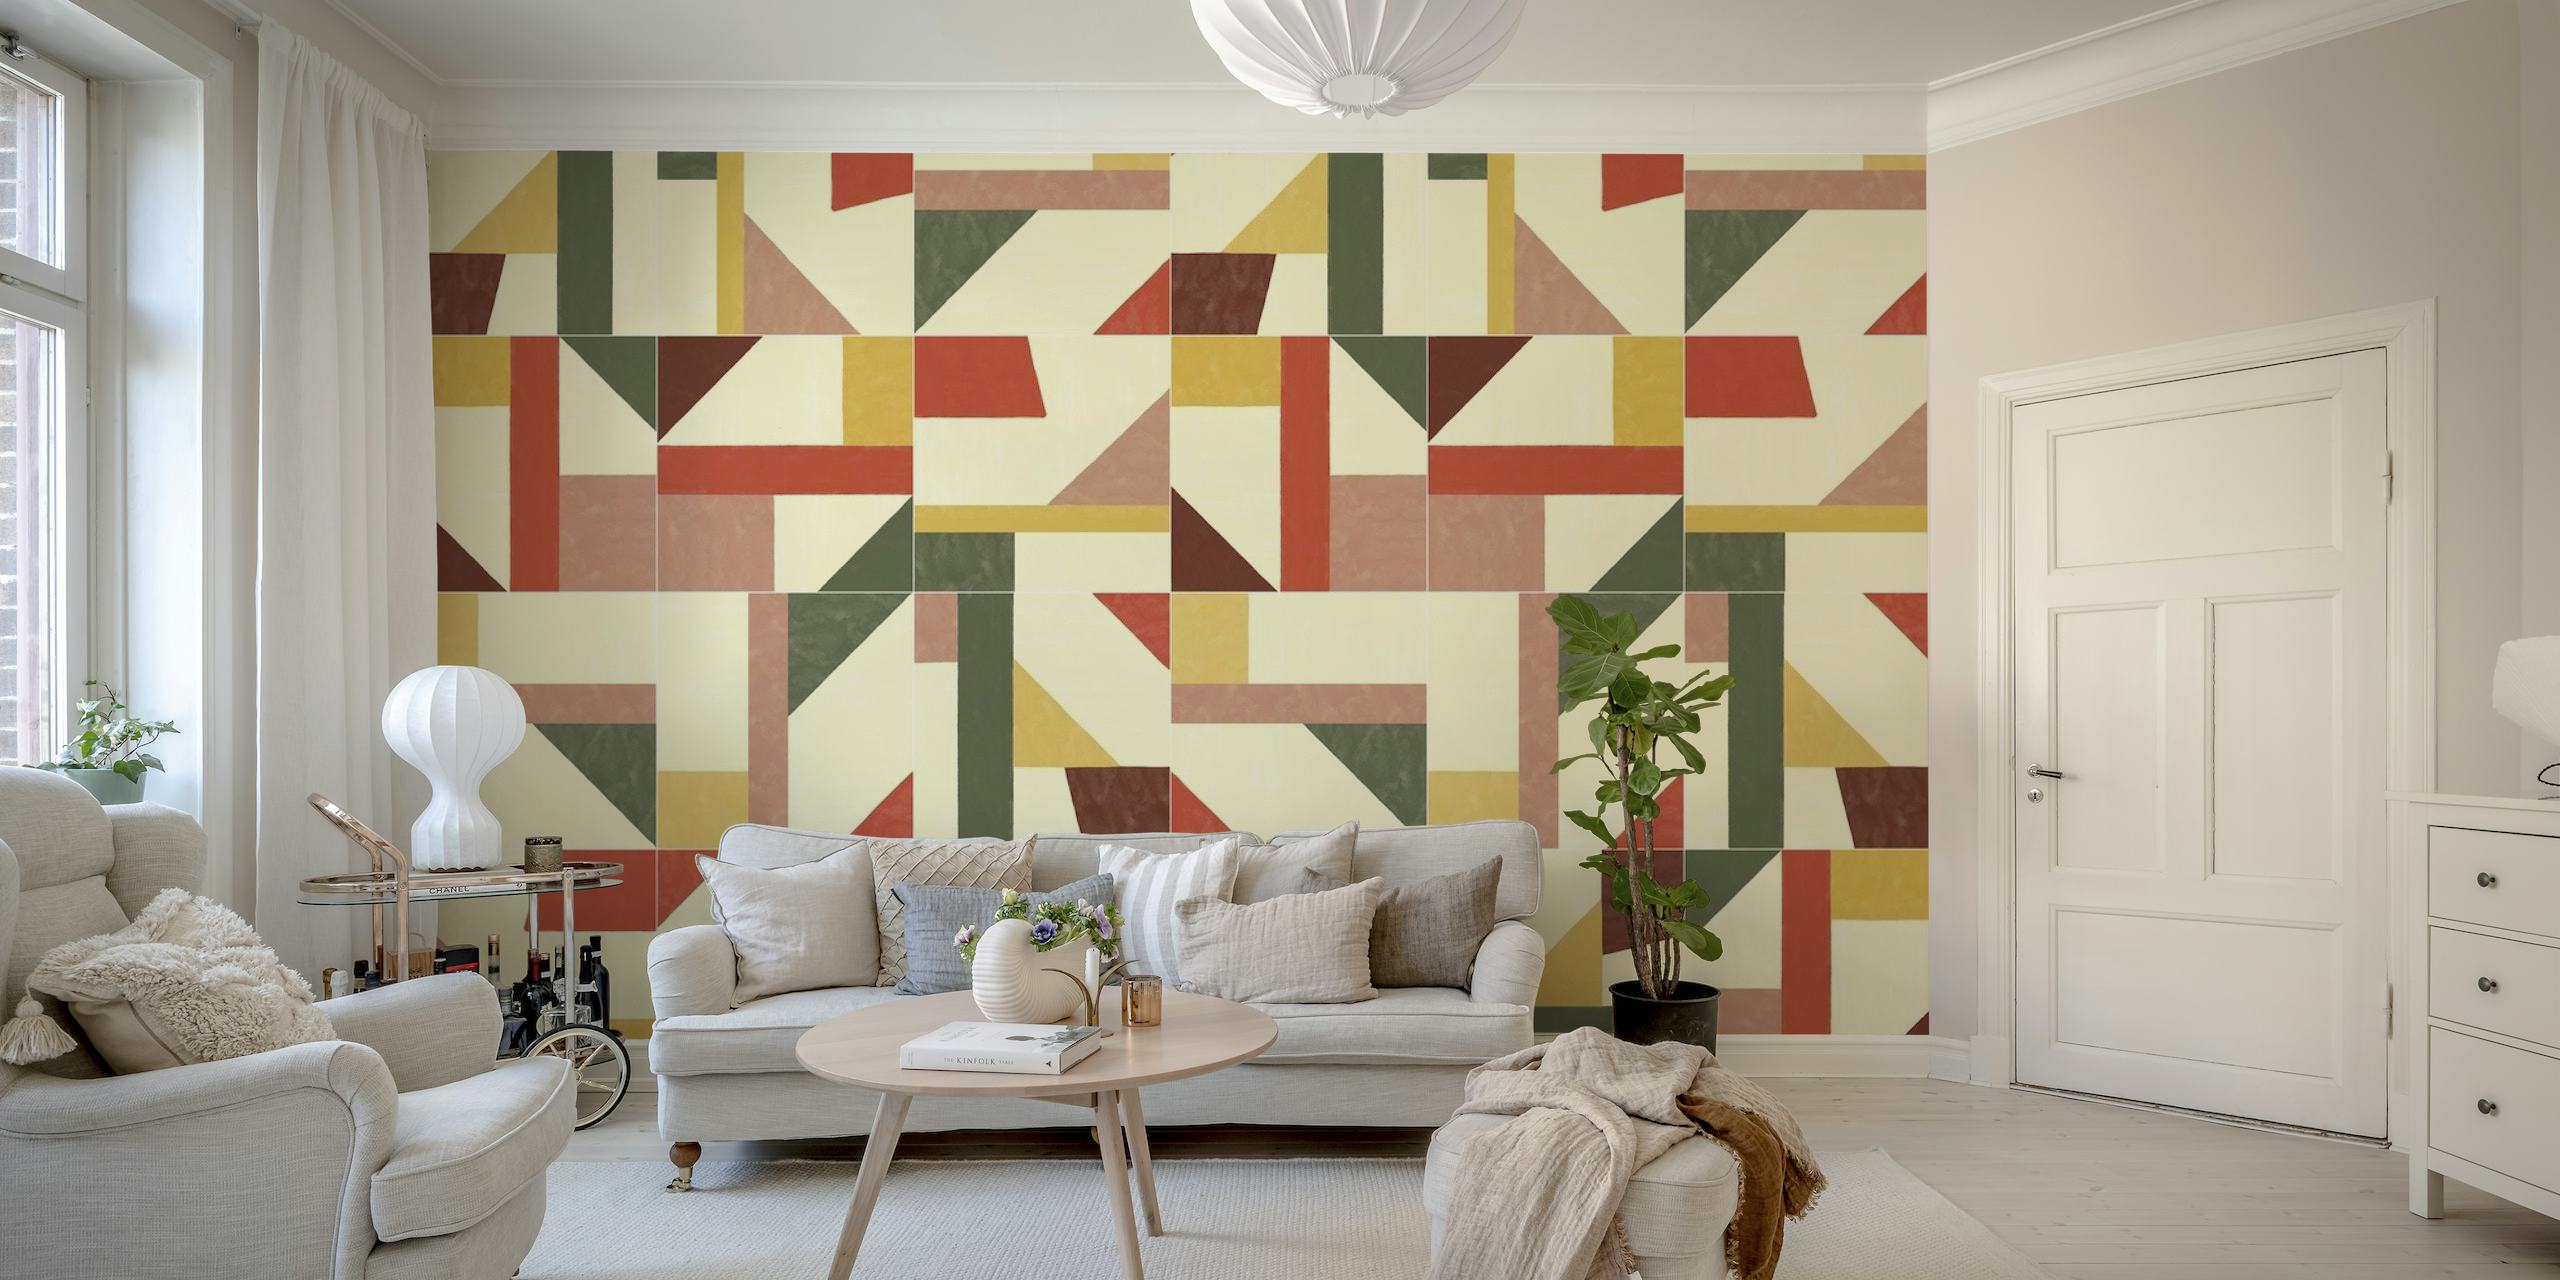 Tangram Wall Tiles Two papiers peint